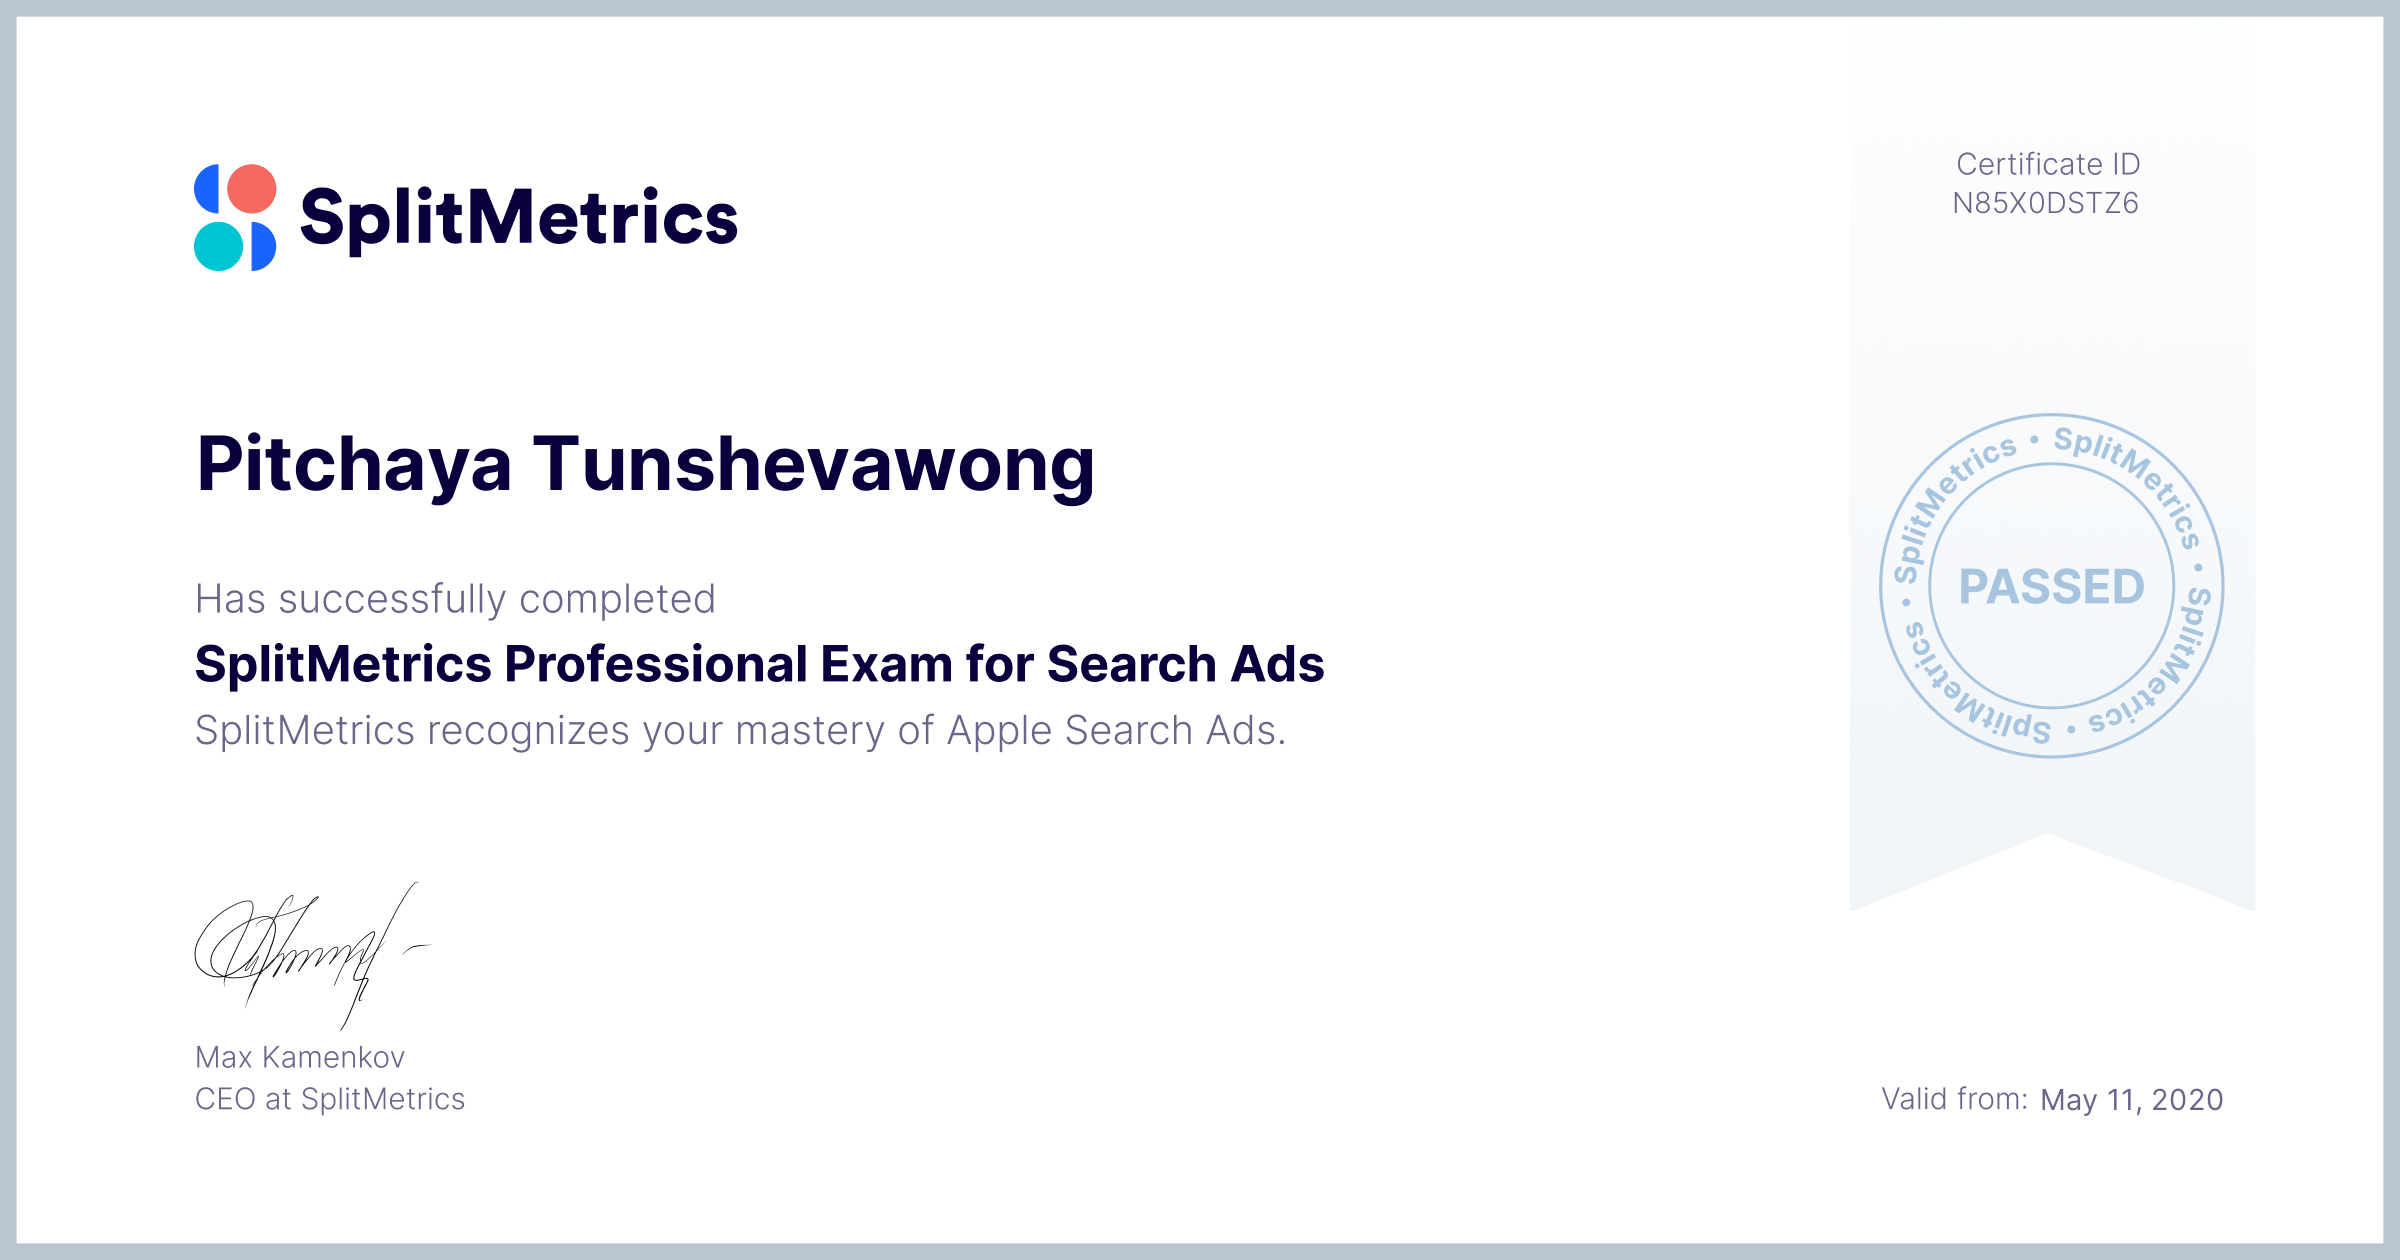 Certificate for Pitchaya Tunshevawong | SplitMetrics Professional Exam for Search Ads